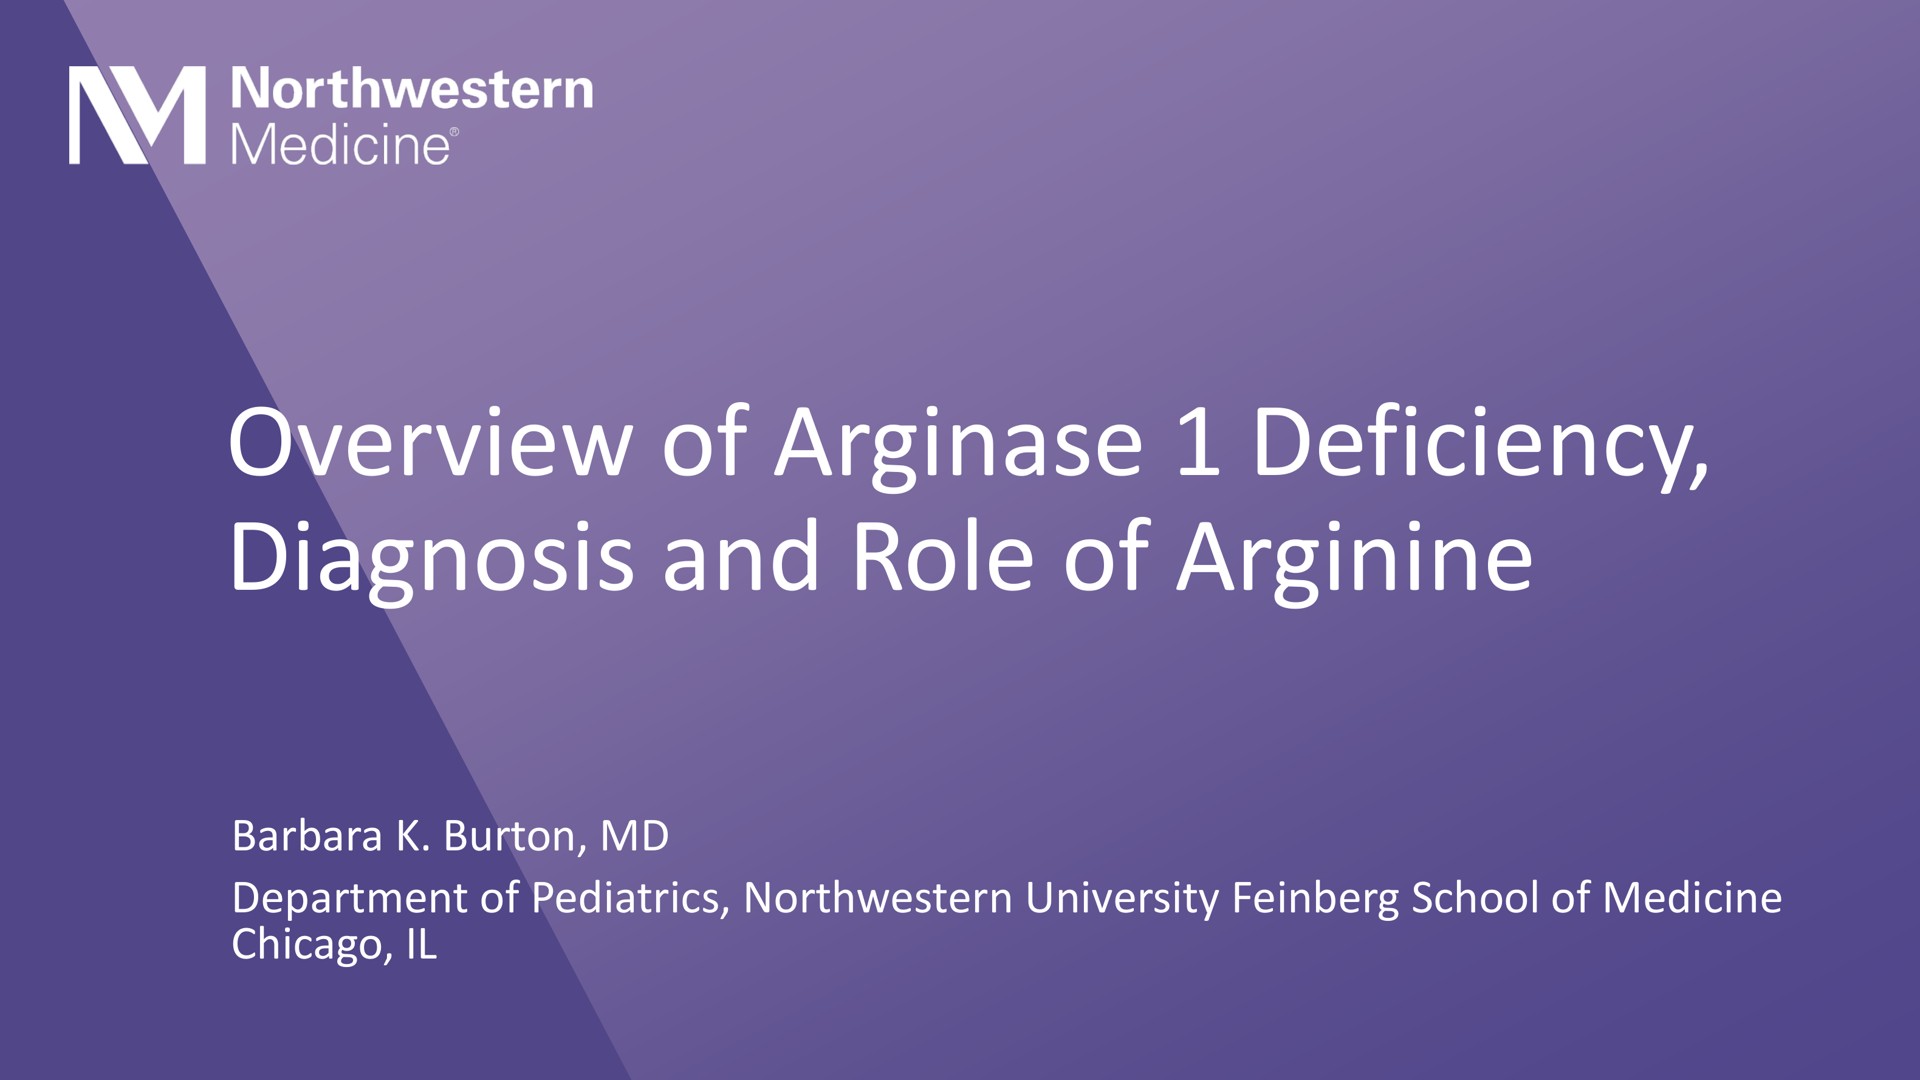 overview of deficiency diagnosis and role of arginine northwestern medicine | Aeglea BioTherapeutics